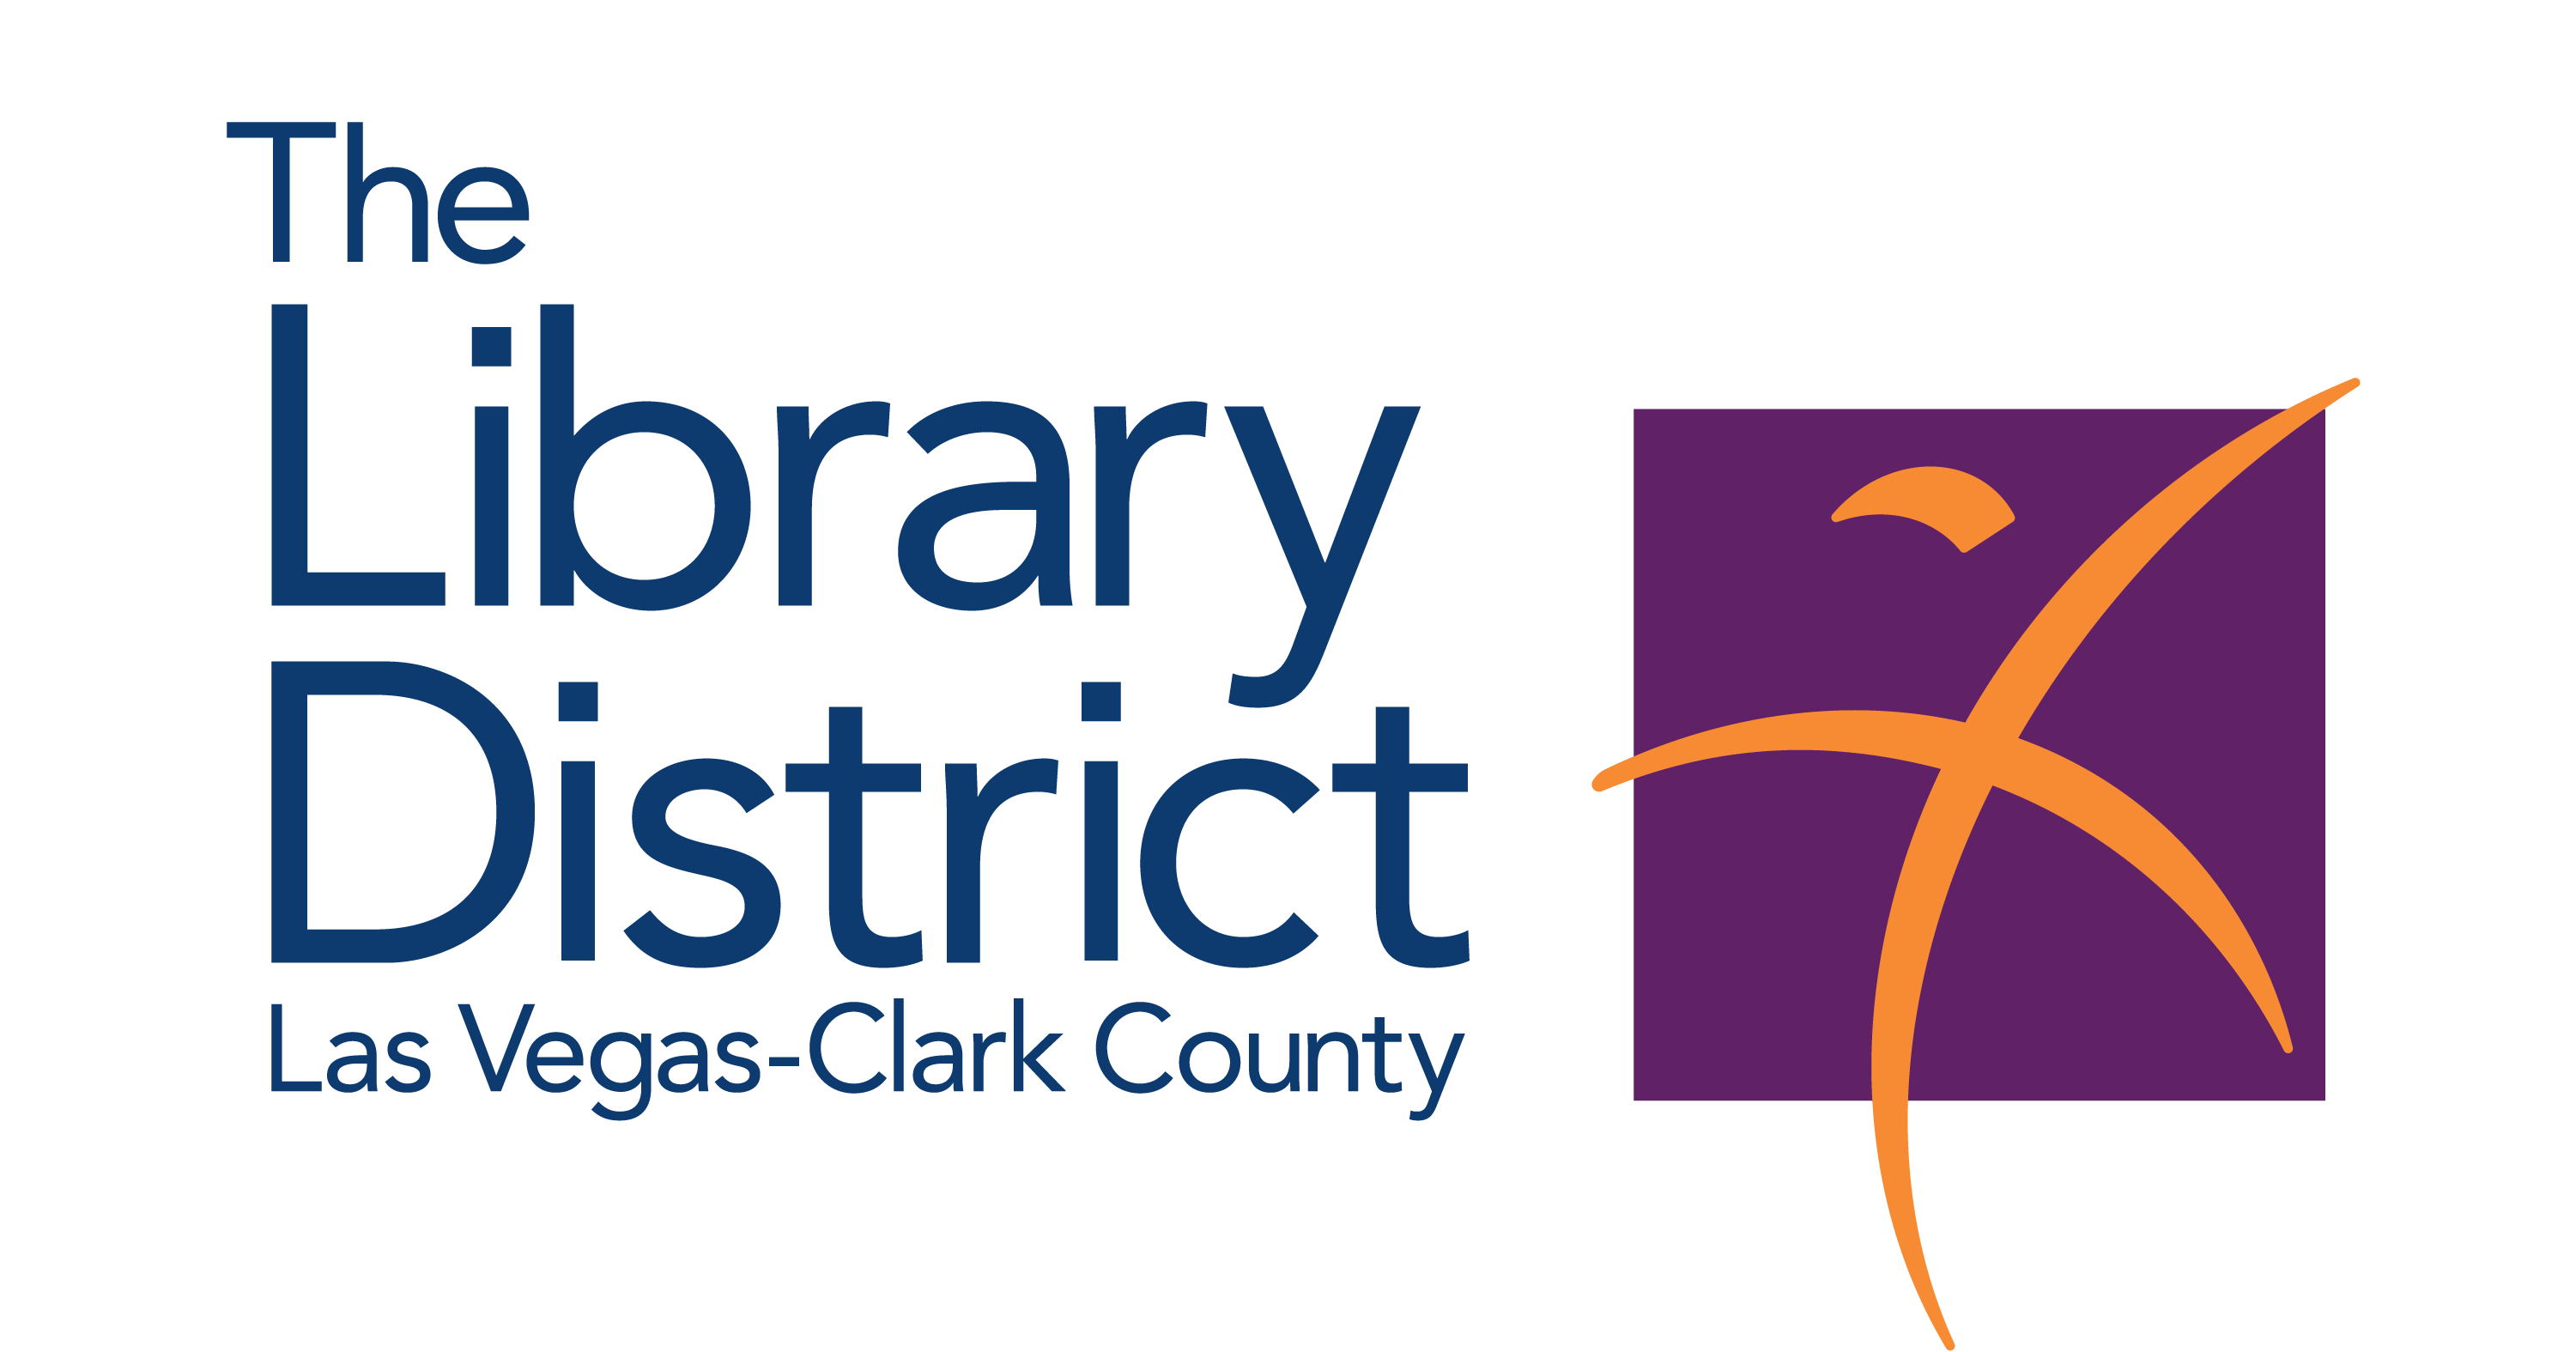 las vegas clark county logos